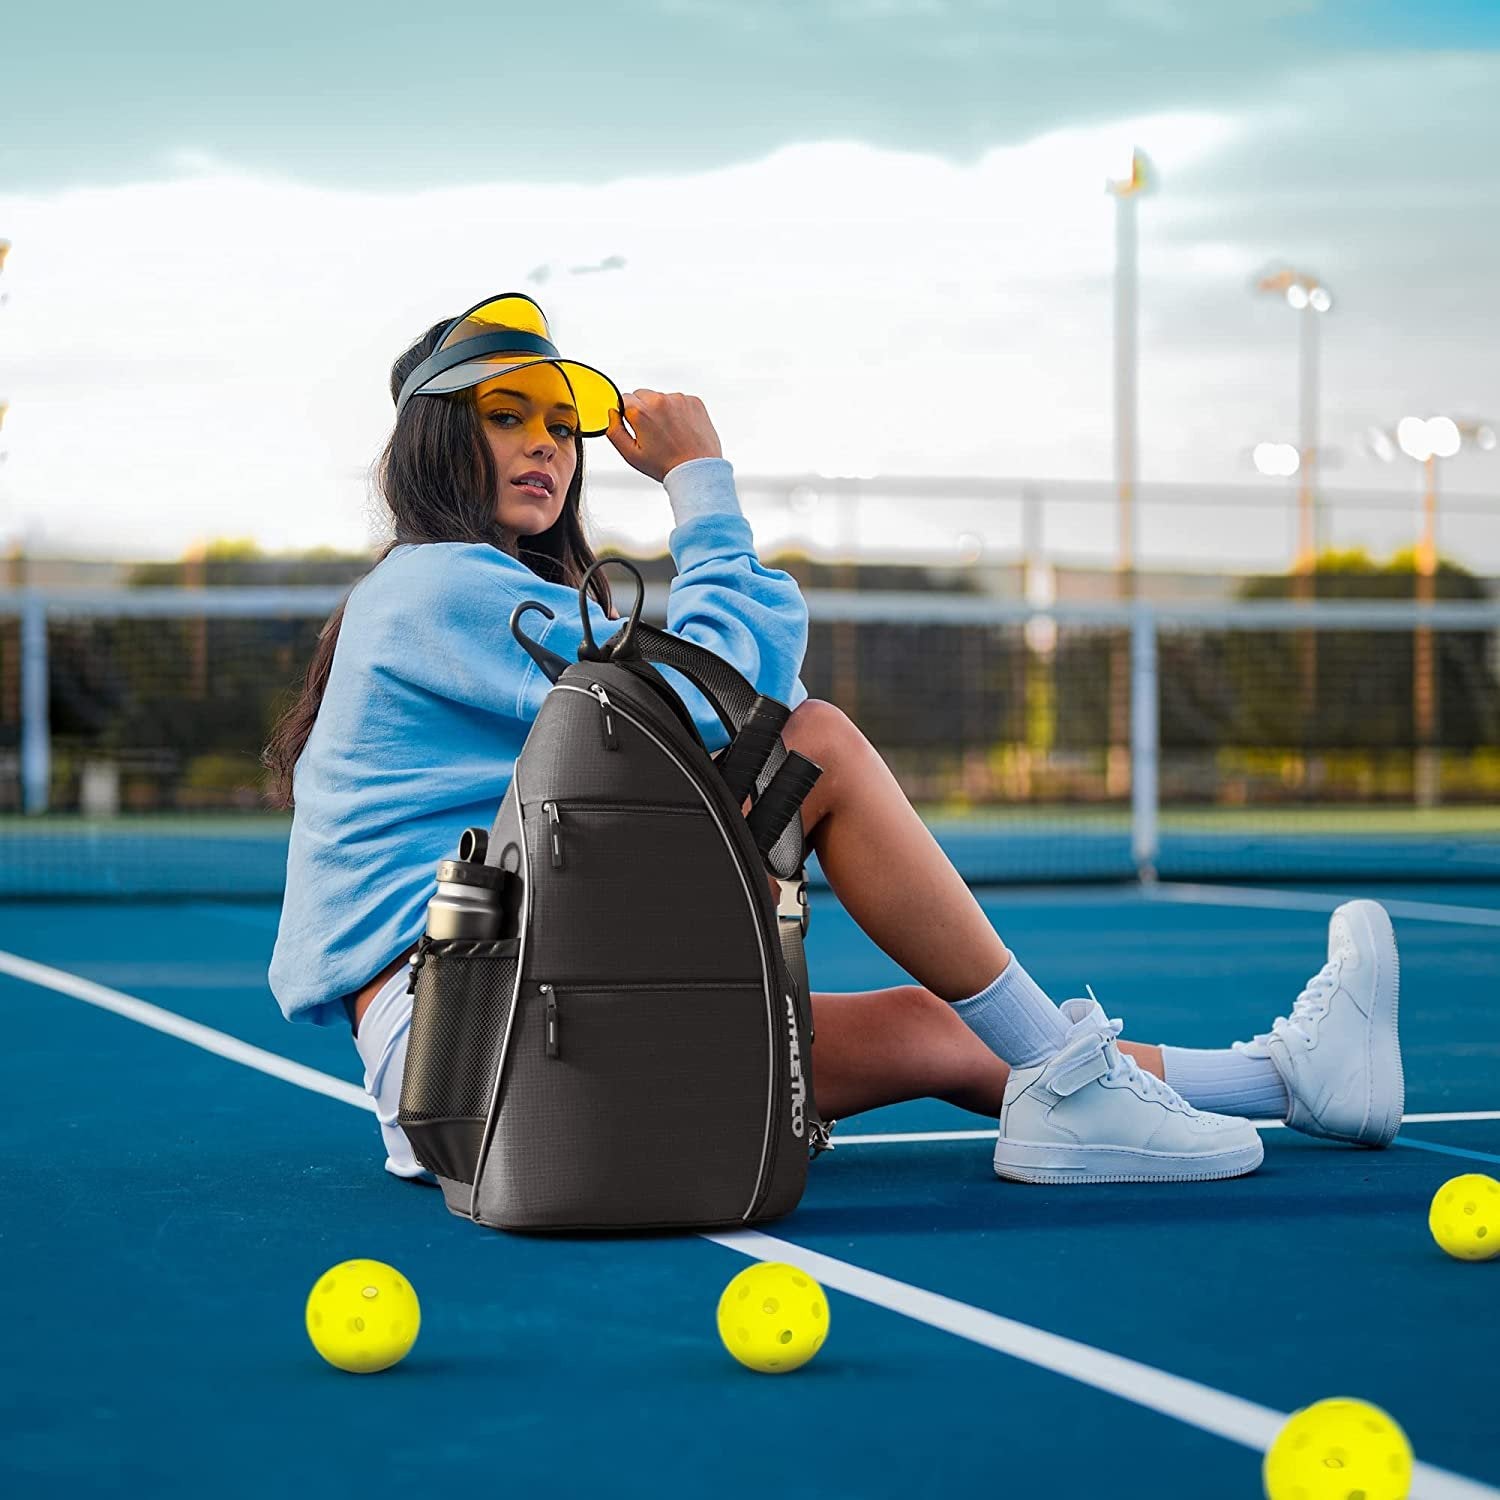 Athletico Sling Bag - Crossbody Backpack for Pickleball, Tennis, Racketball, and Travel for Men and Women (Black)